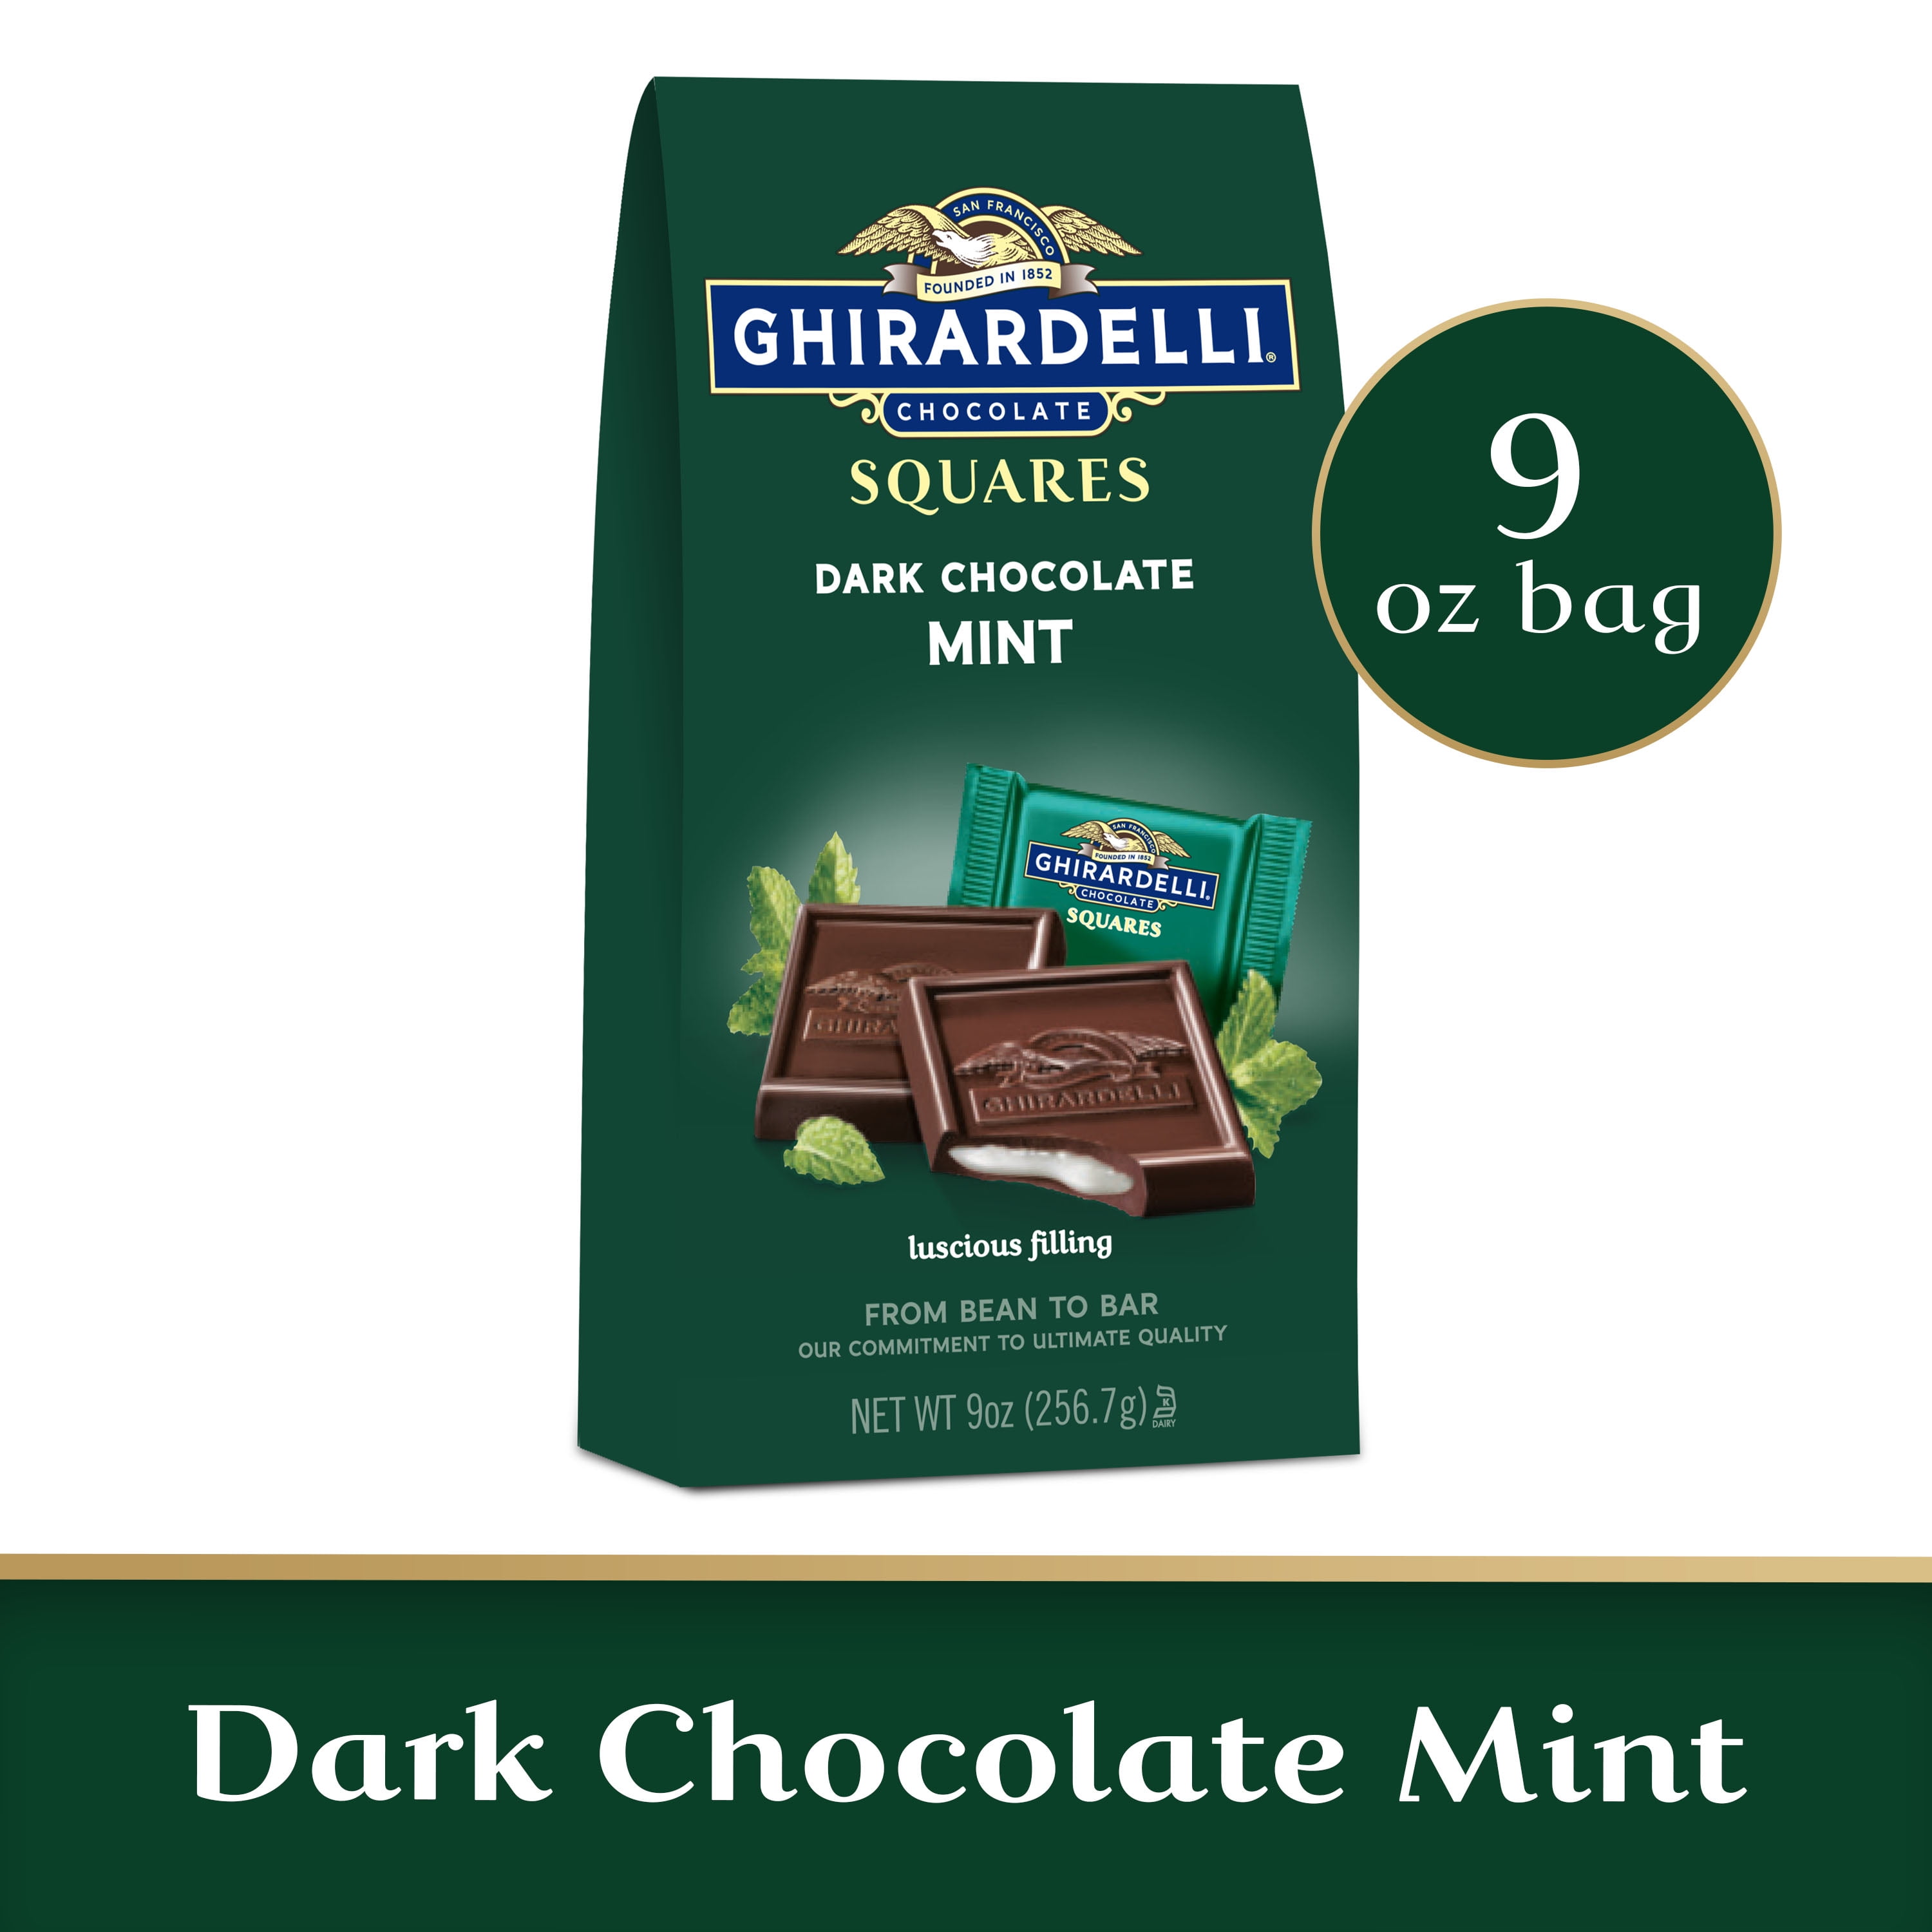 GHIRARDELLI Dark Chocolate Mint Squares, 9 Oz Bag